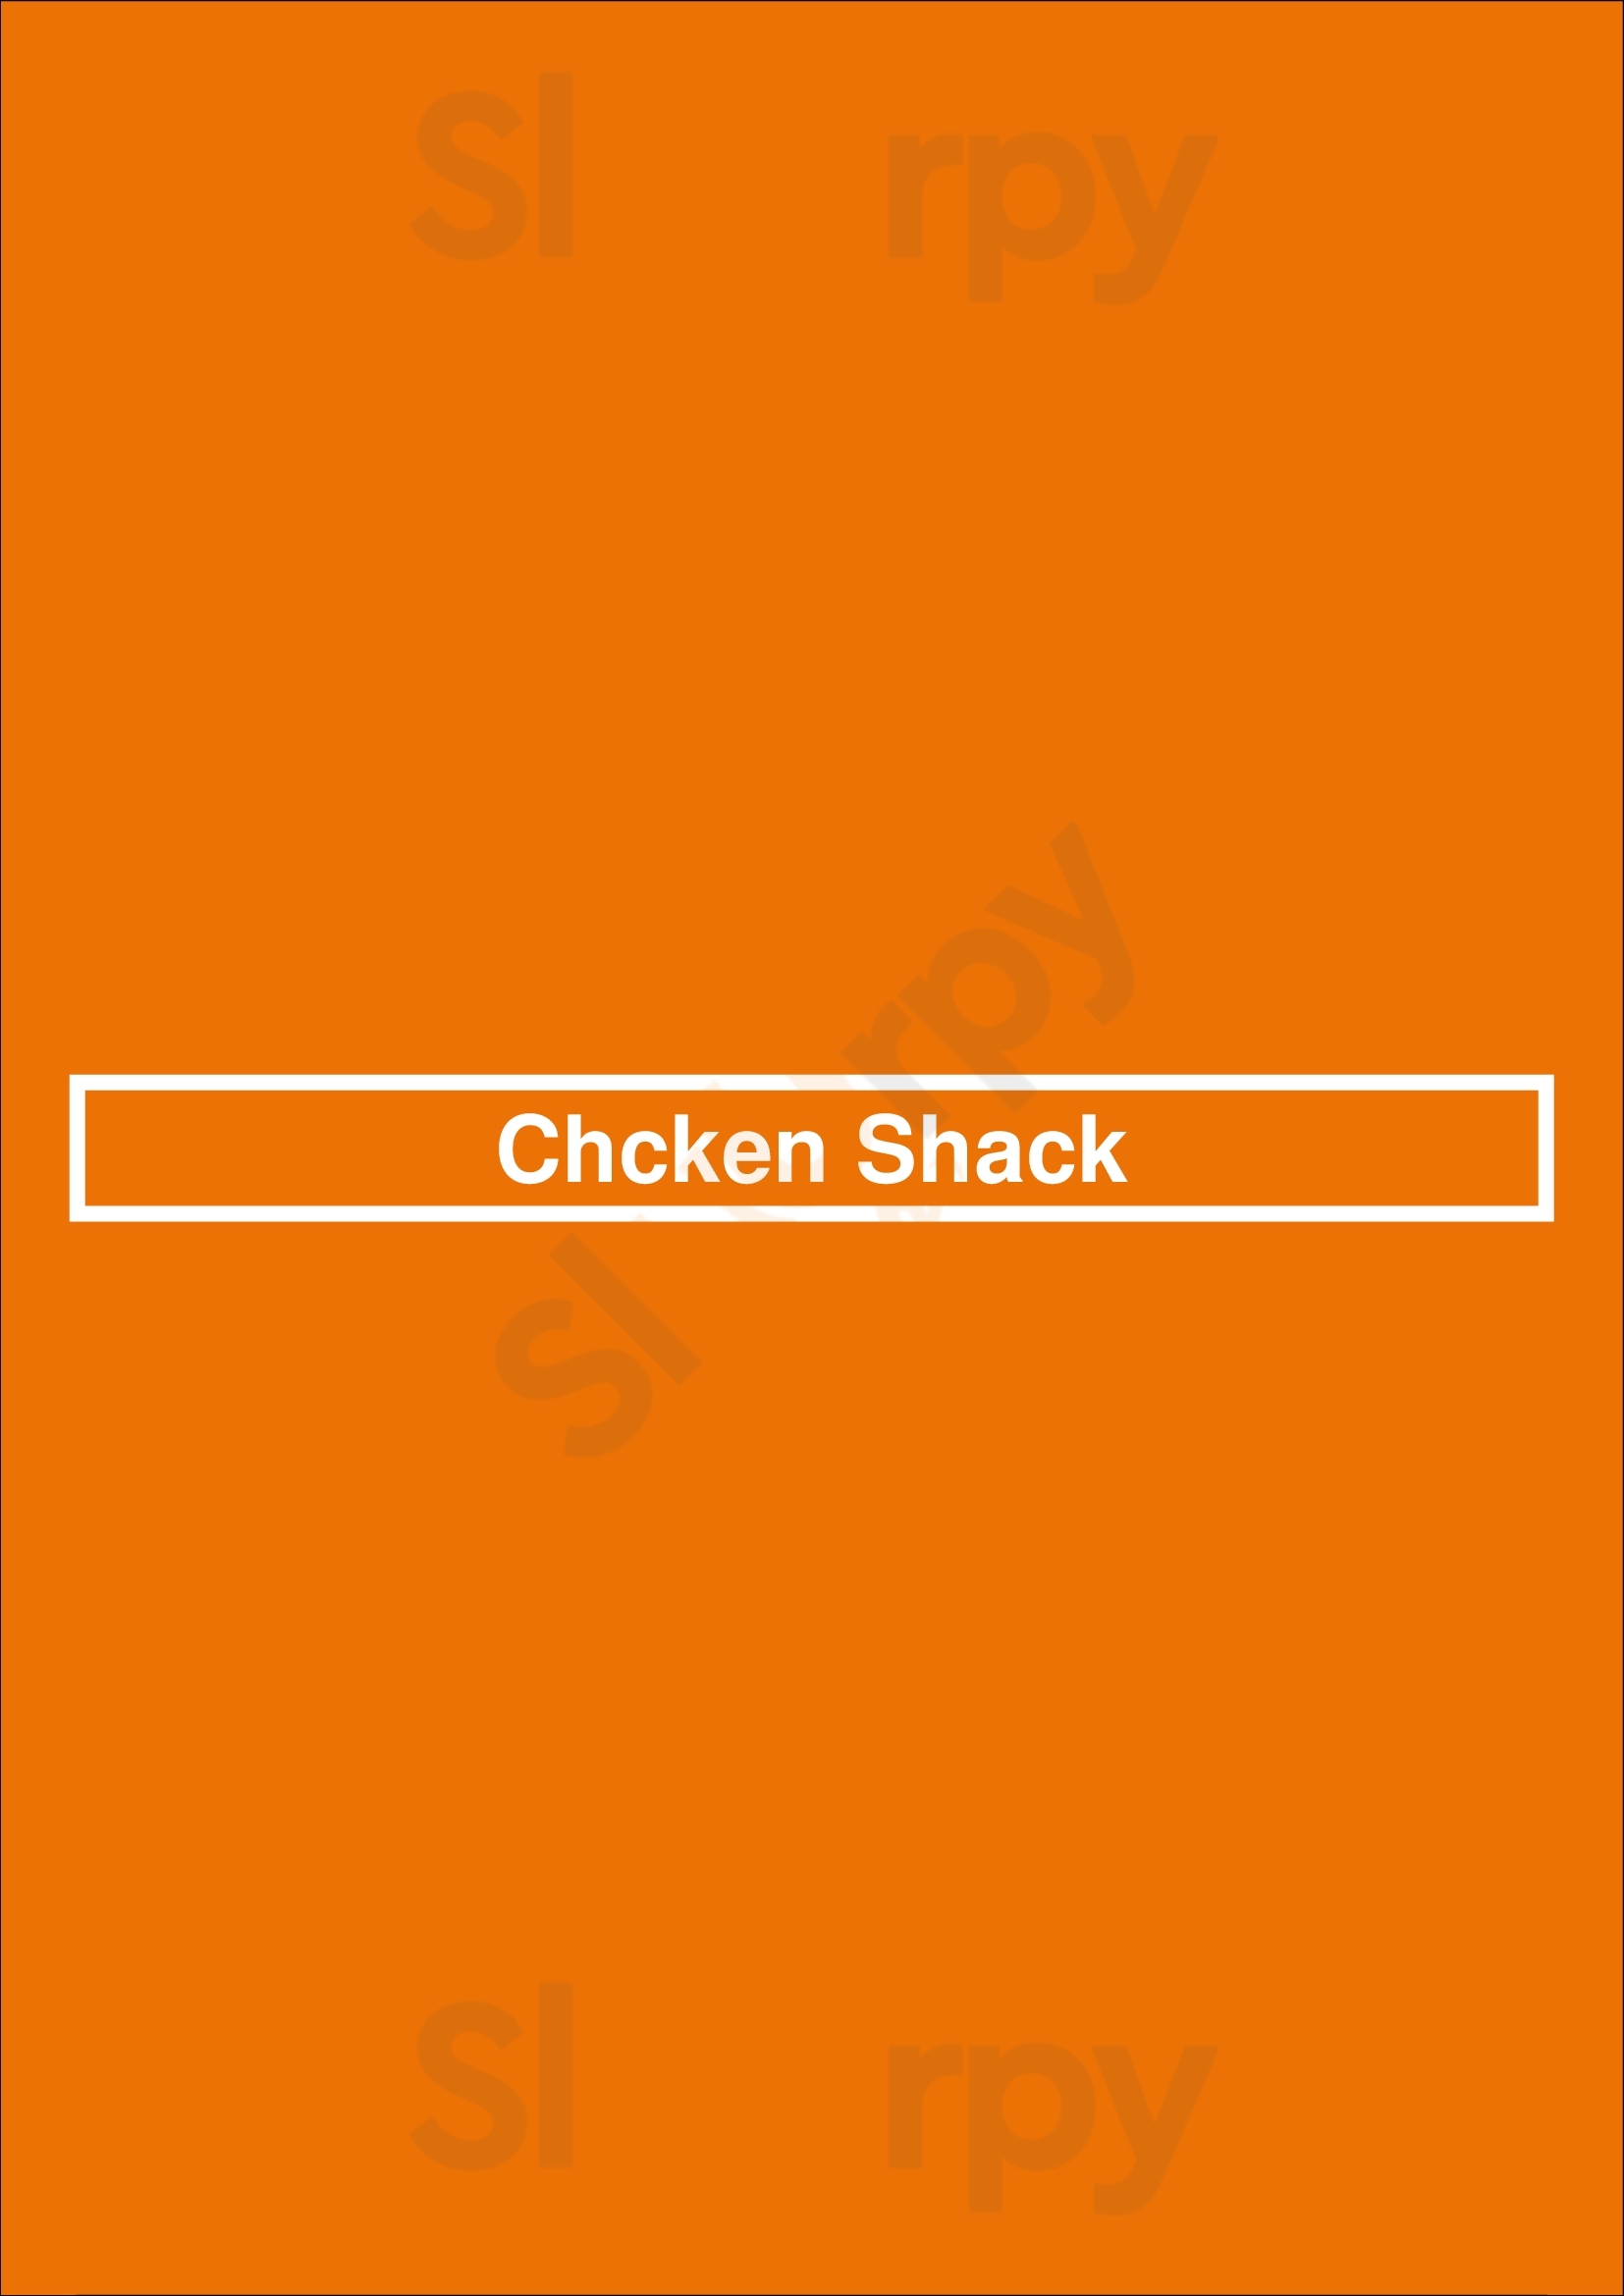 The Chicken Shack Henderson Menu - 1